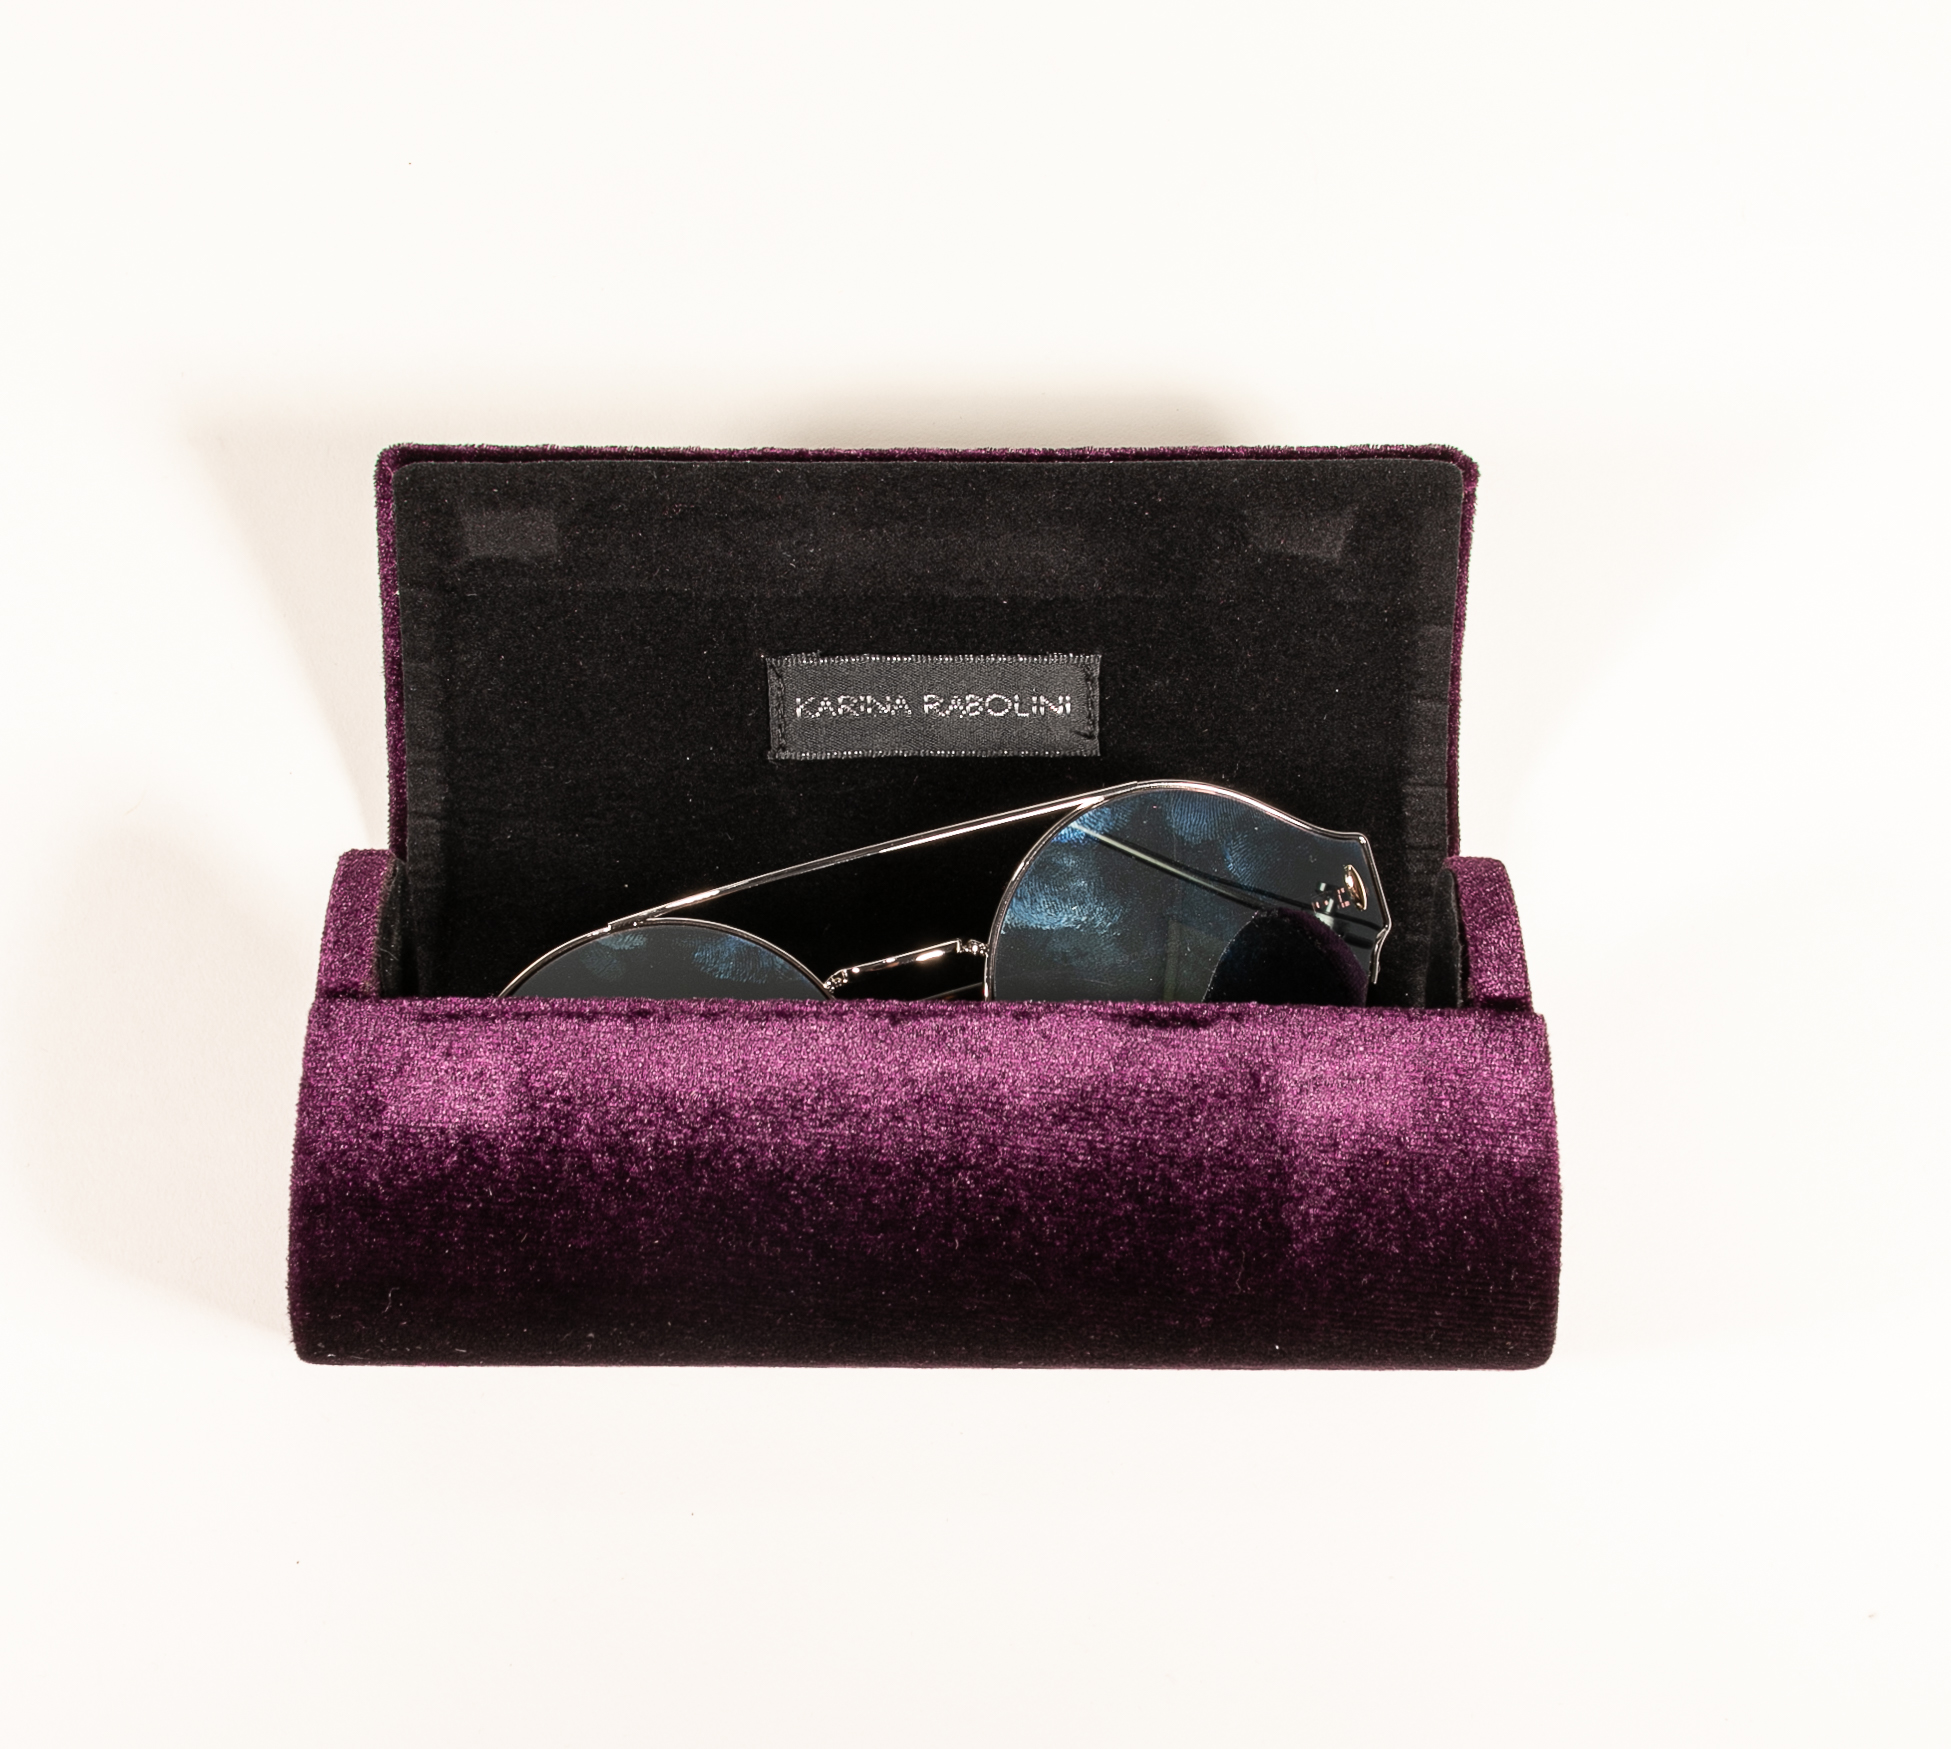 2021 Sunglasses, Dark Purple, Handmade Glasses Case Printed with LOGO, Look Like A Lady's Leather Bag